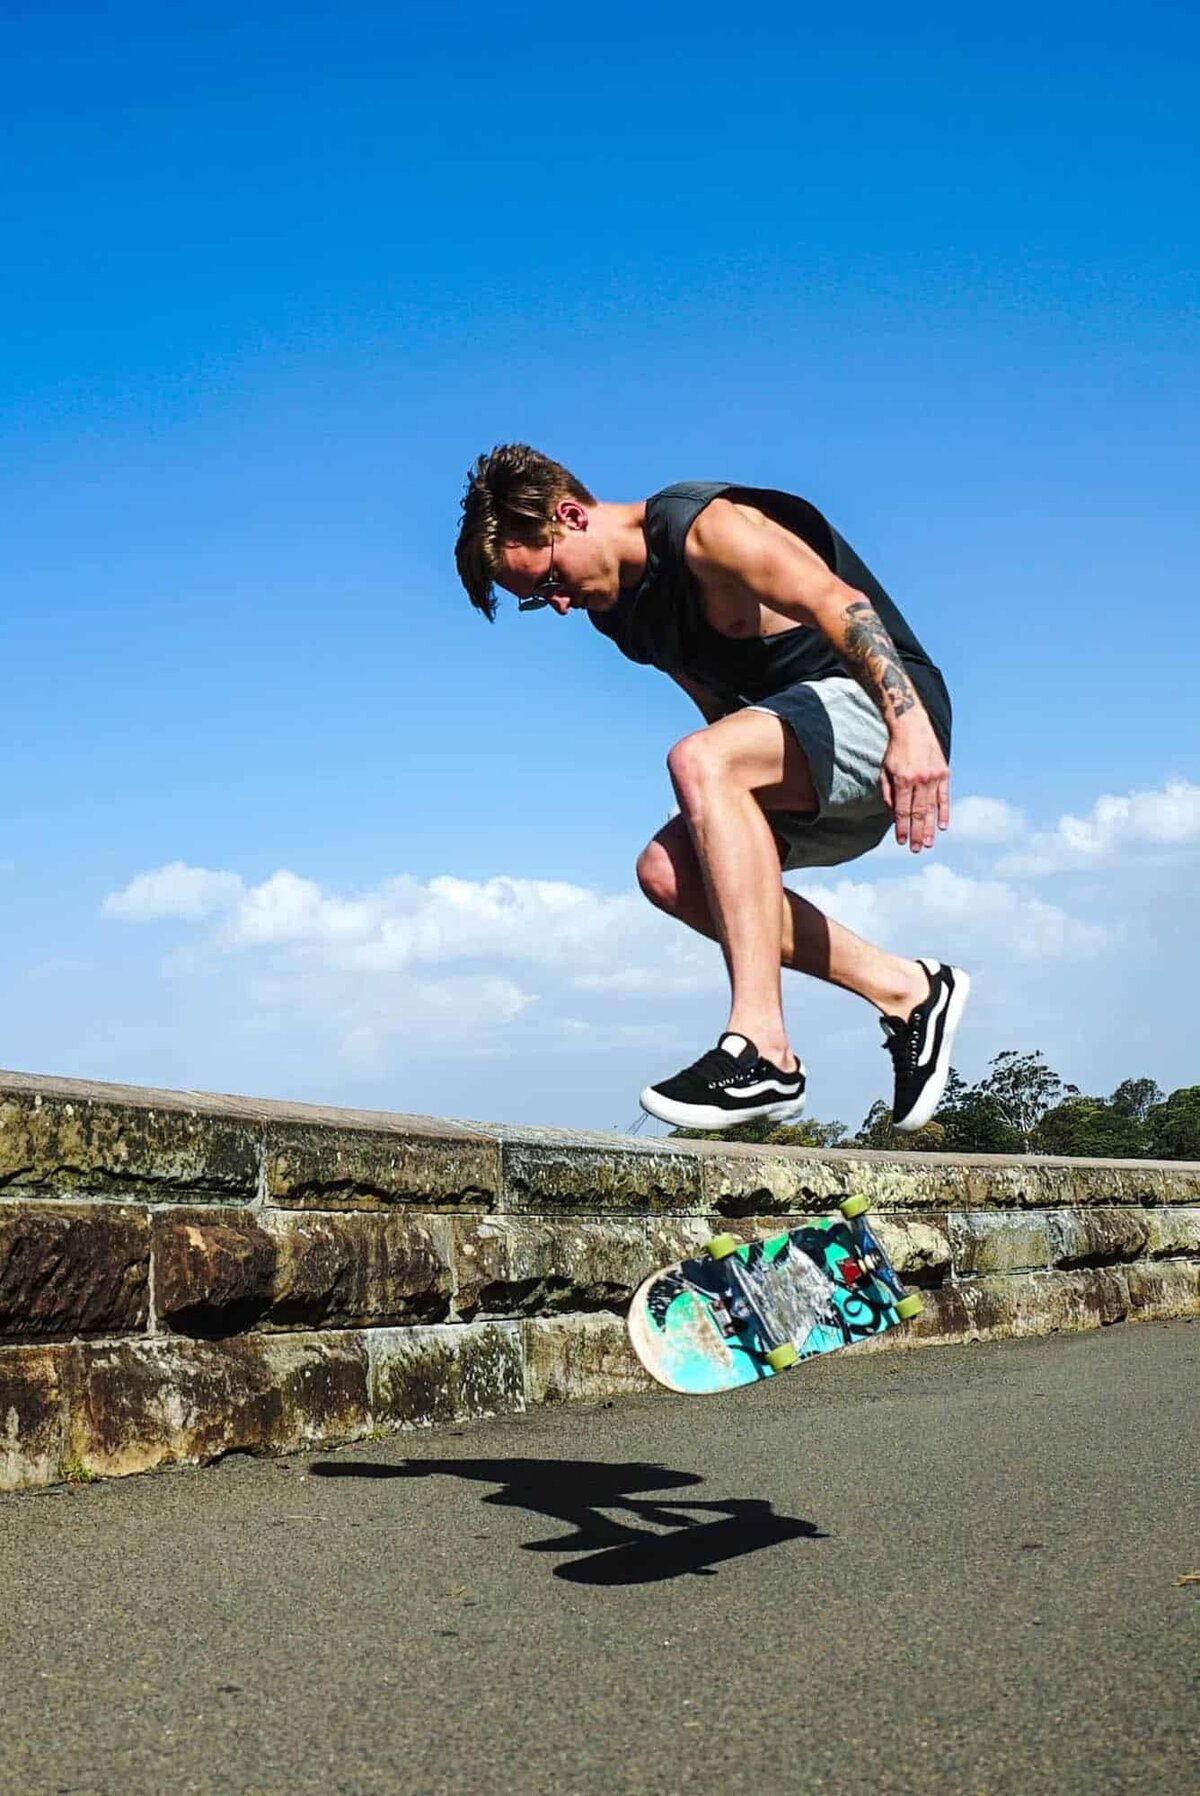 skateboarder-in-action